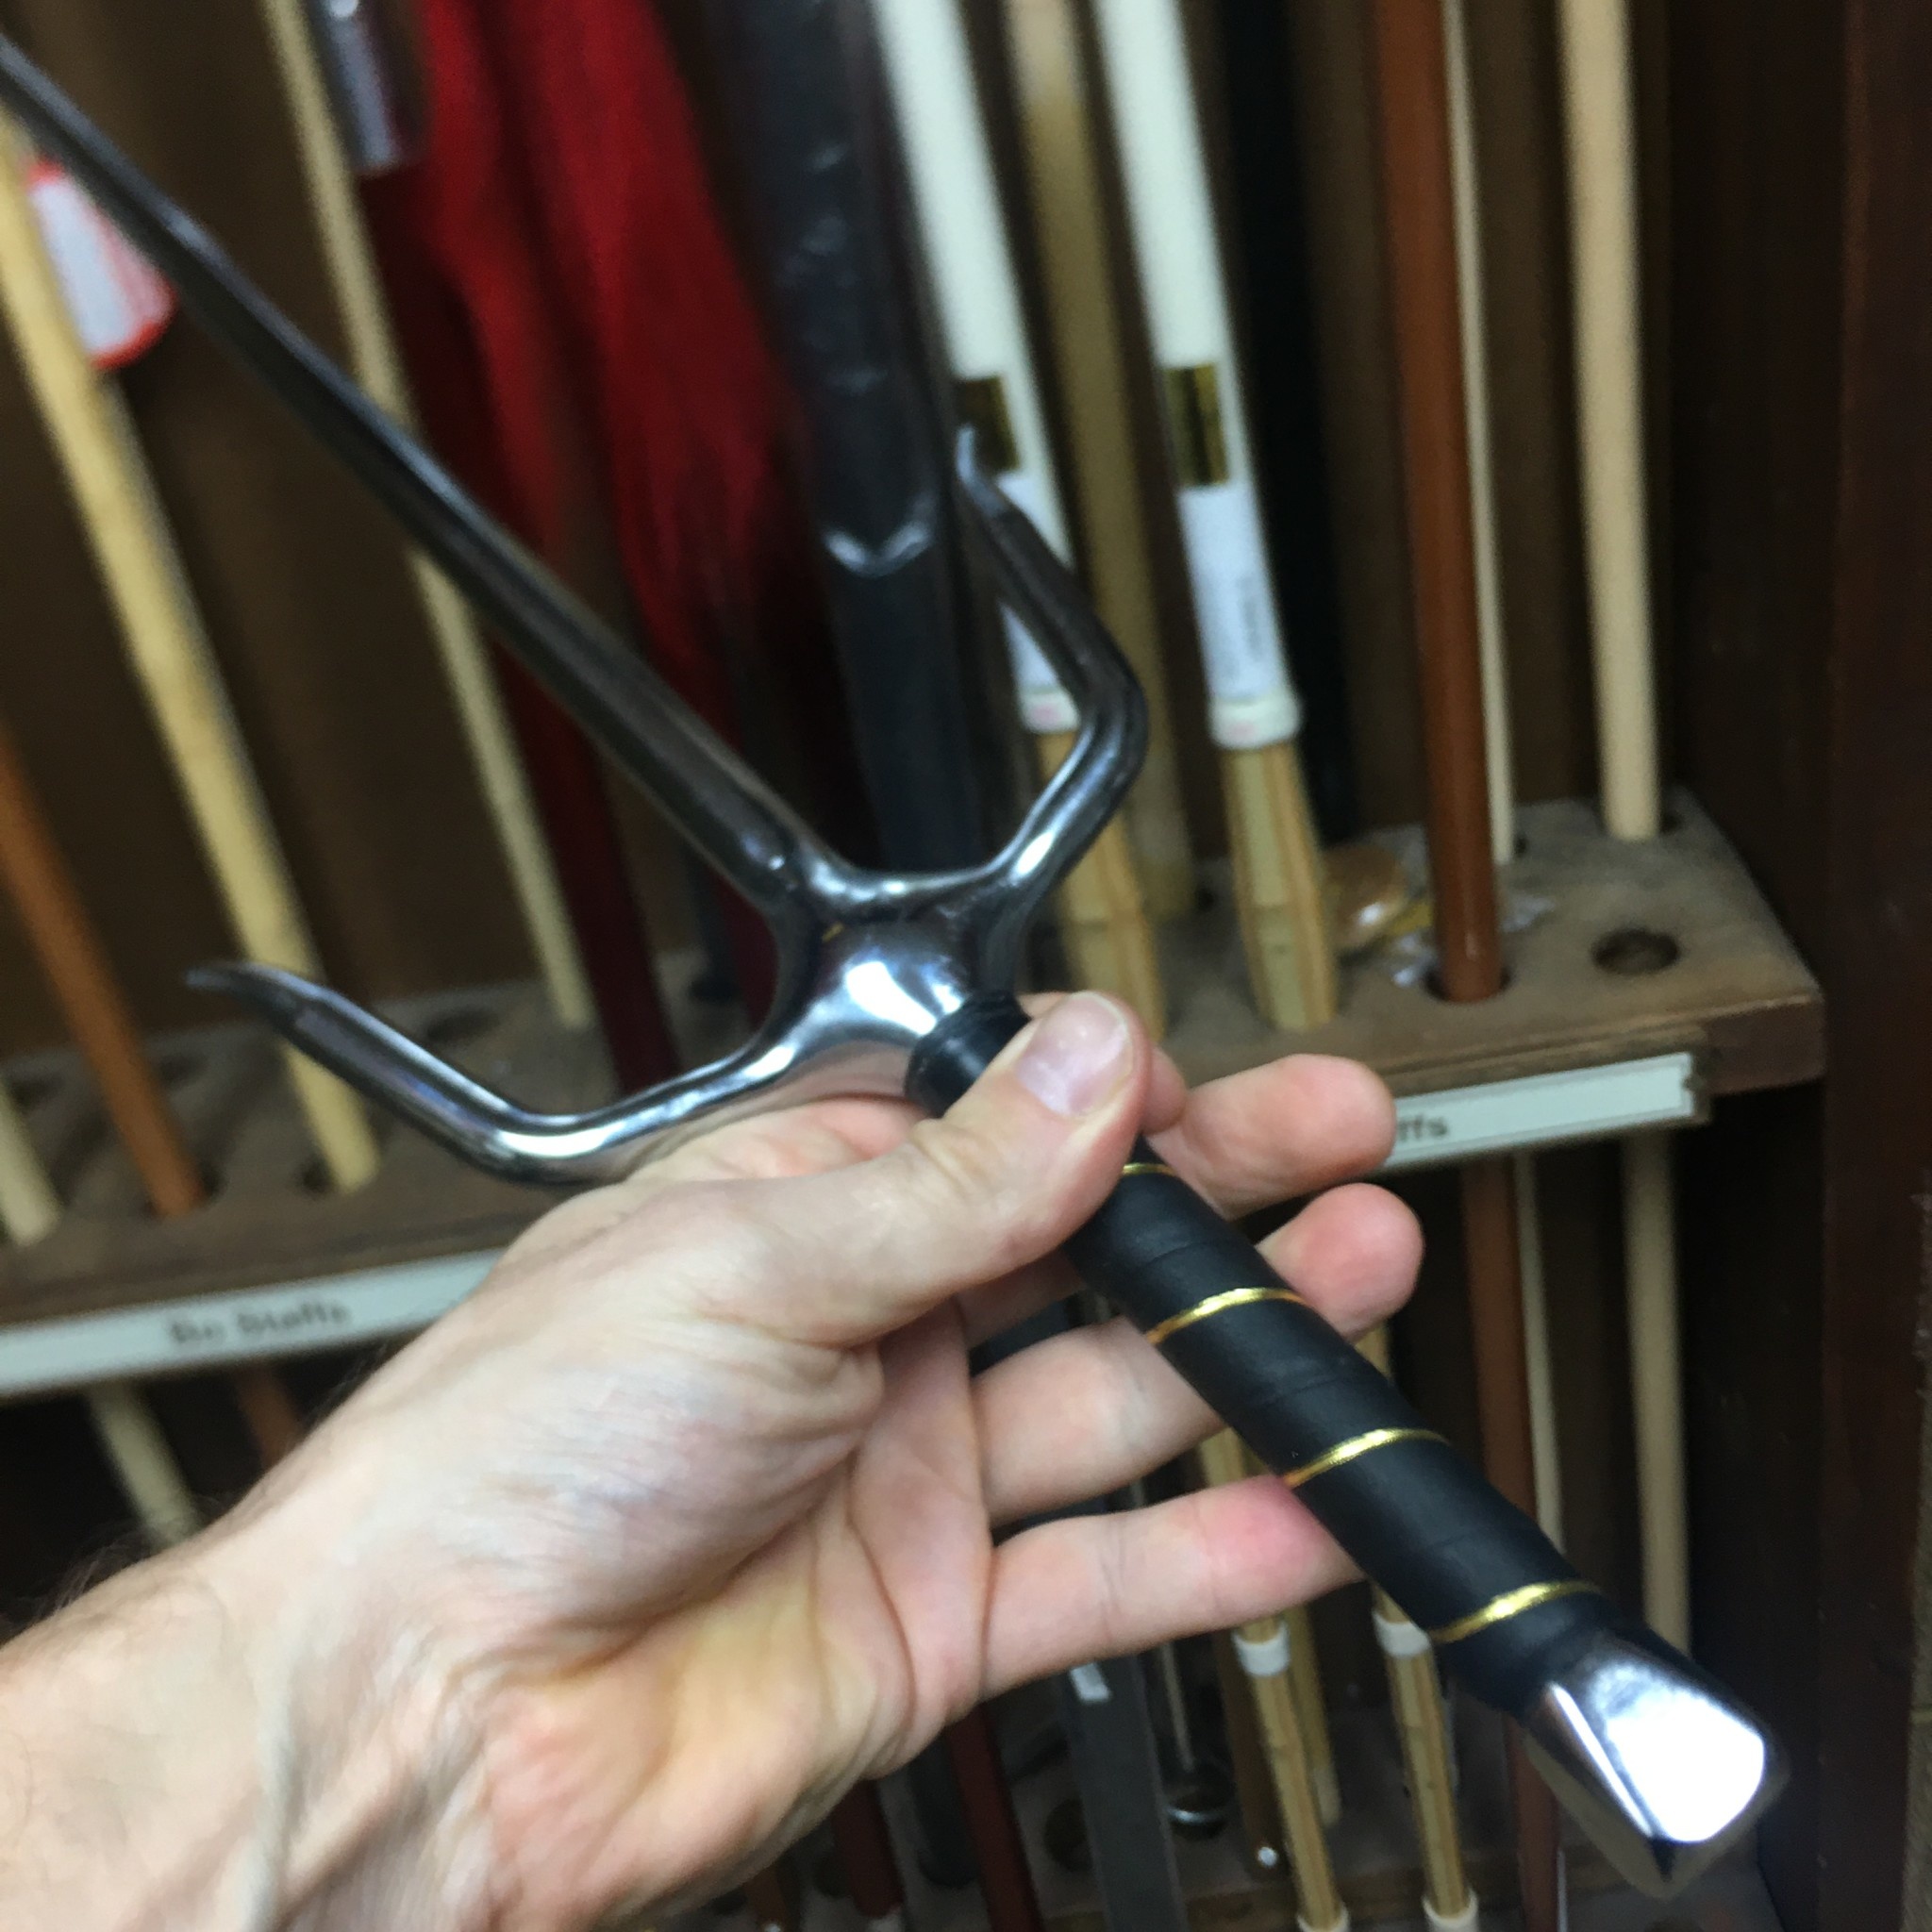 Octagonal Sai Daggers Are A Traditional Okinawan Weapon Enso Martial Arts Shop Bristol 5589